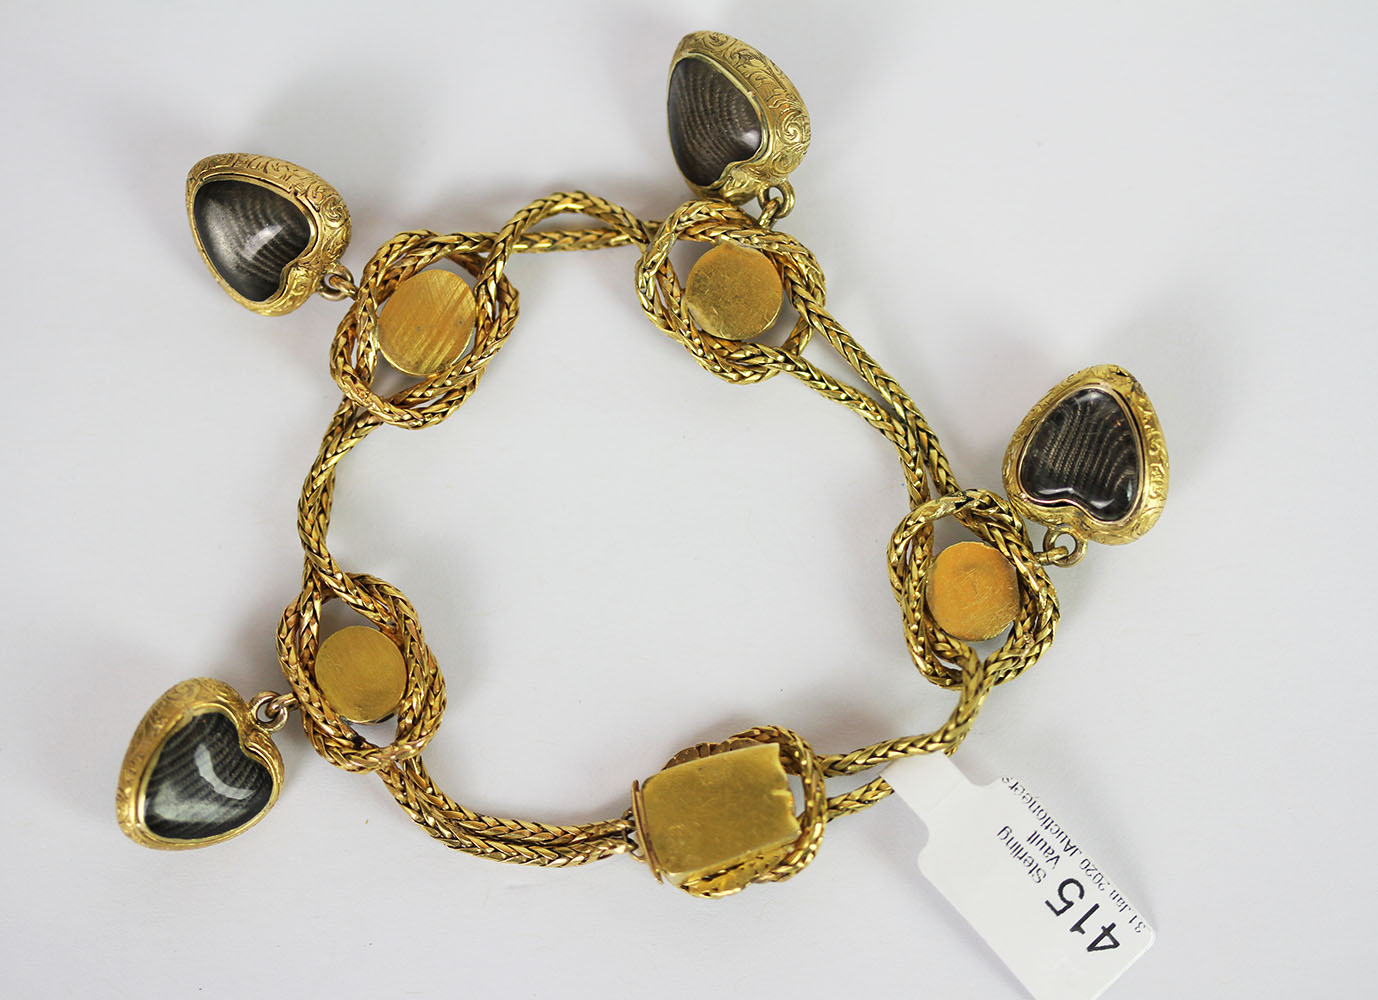 Garnet set charm bracelet, set with a total of 9 cabochon garnets, 4 dangling heart charms, not - Image 3 of 3